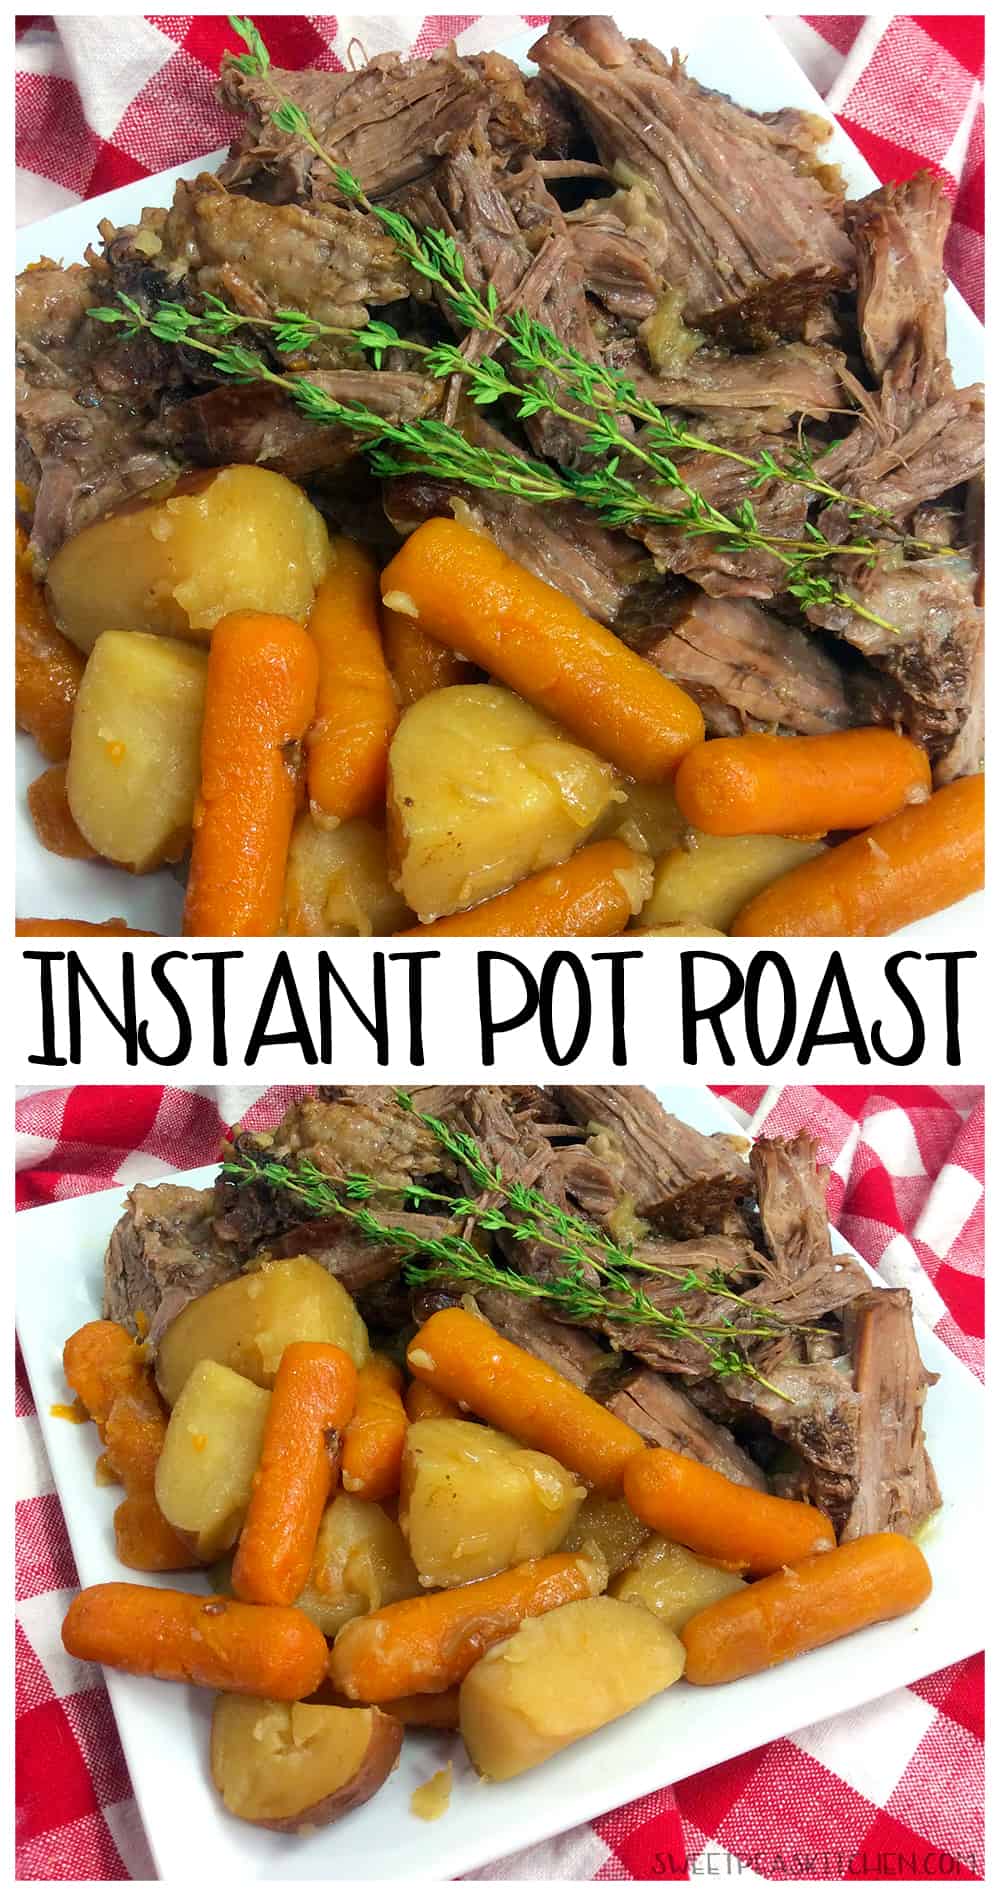 Instant Pot Roast